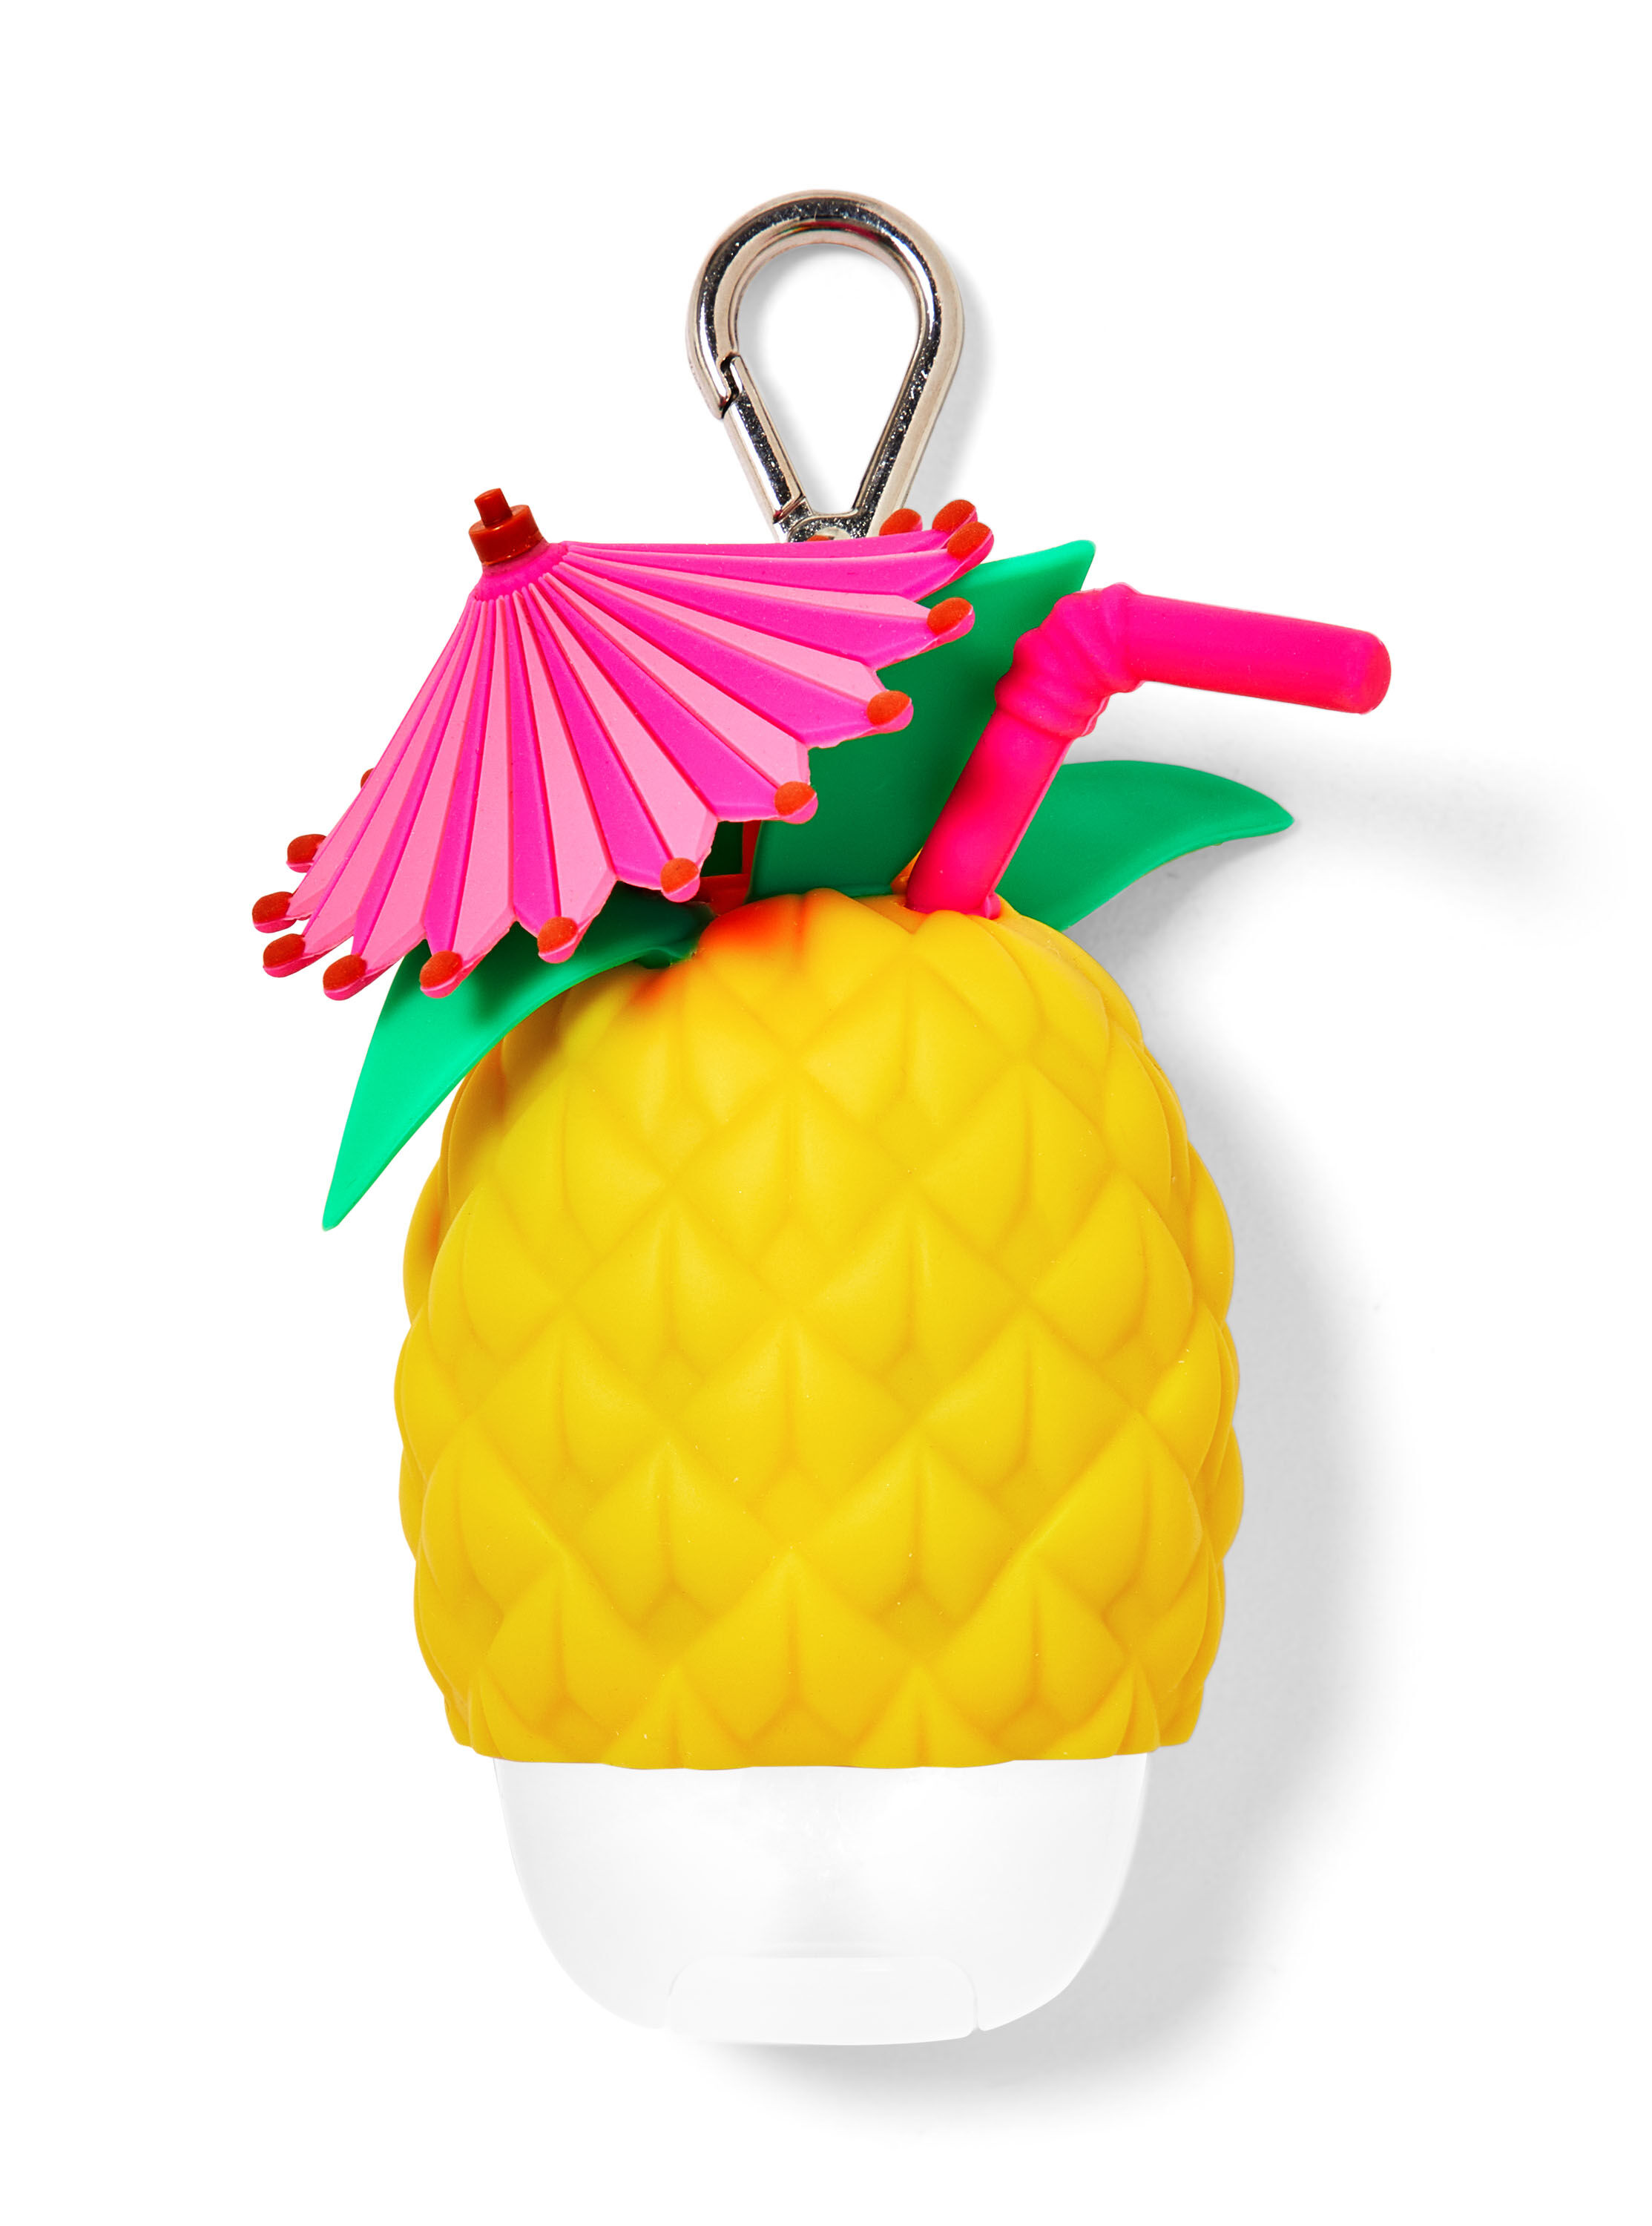 Pineapple Drink PocketBac Holders